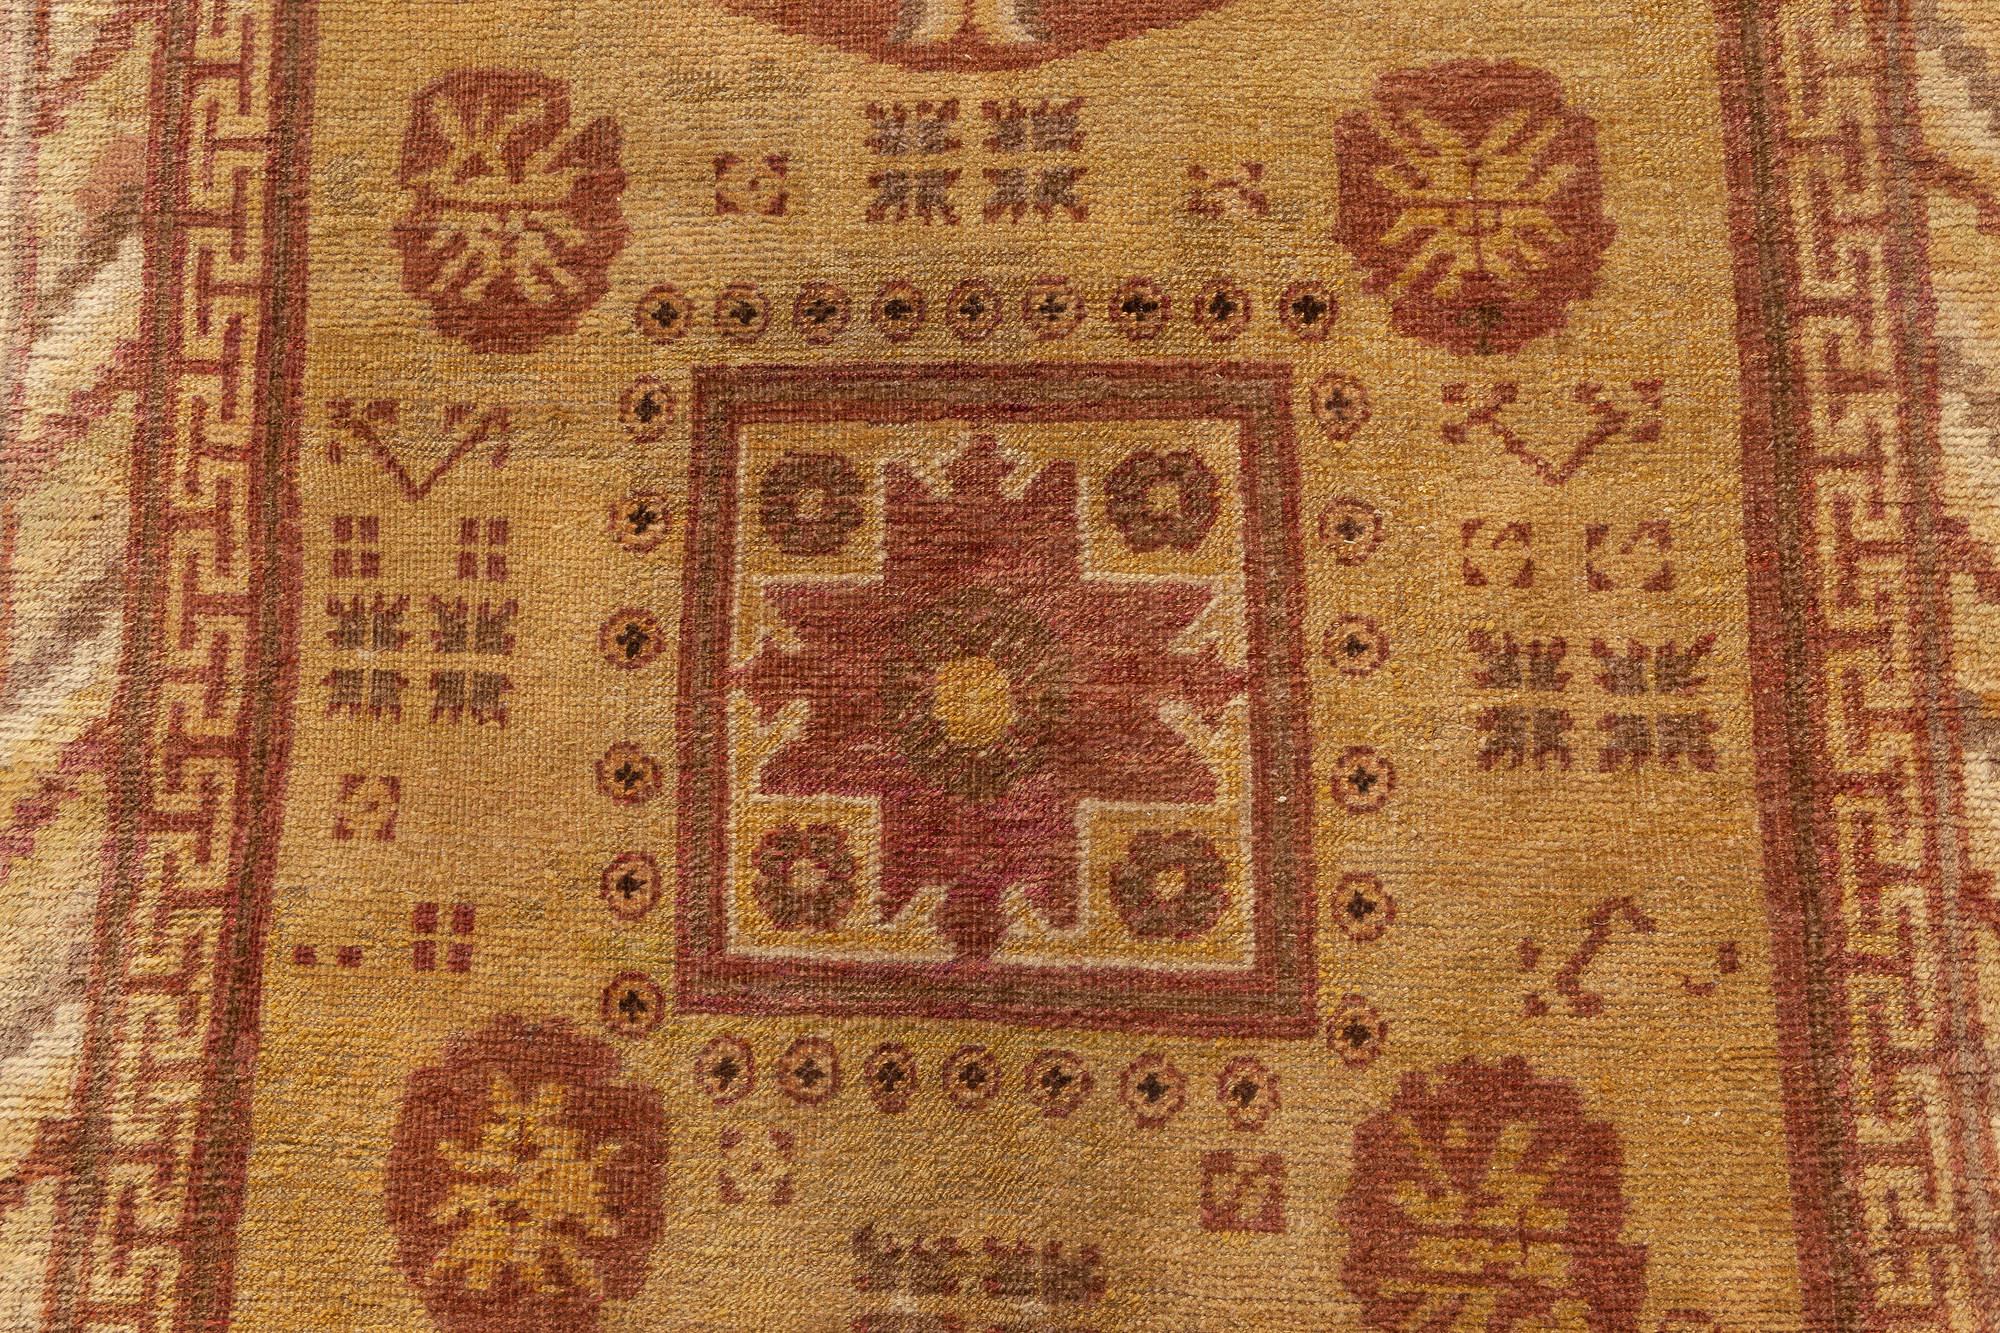 Midcentury Samarkand purple and yellow handmade wool rug.
Size: 3'8